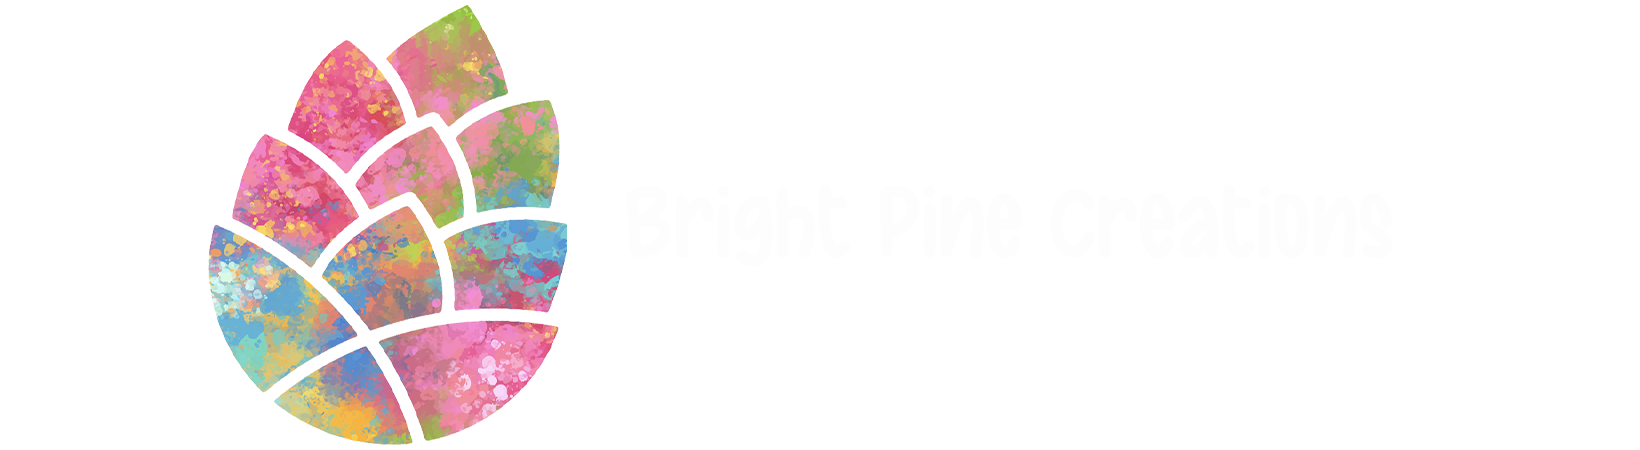 Bright Pine Creations